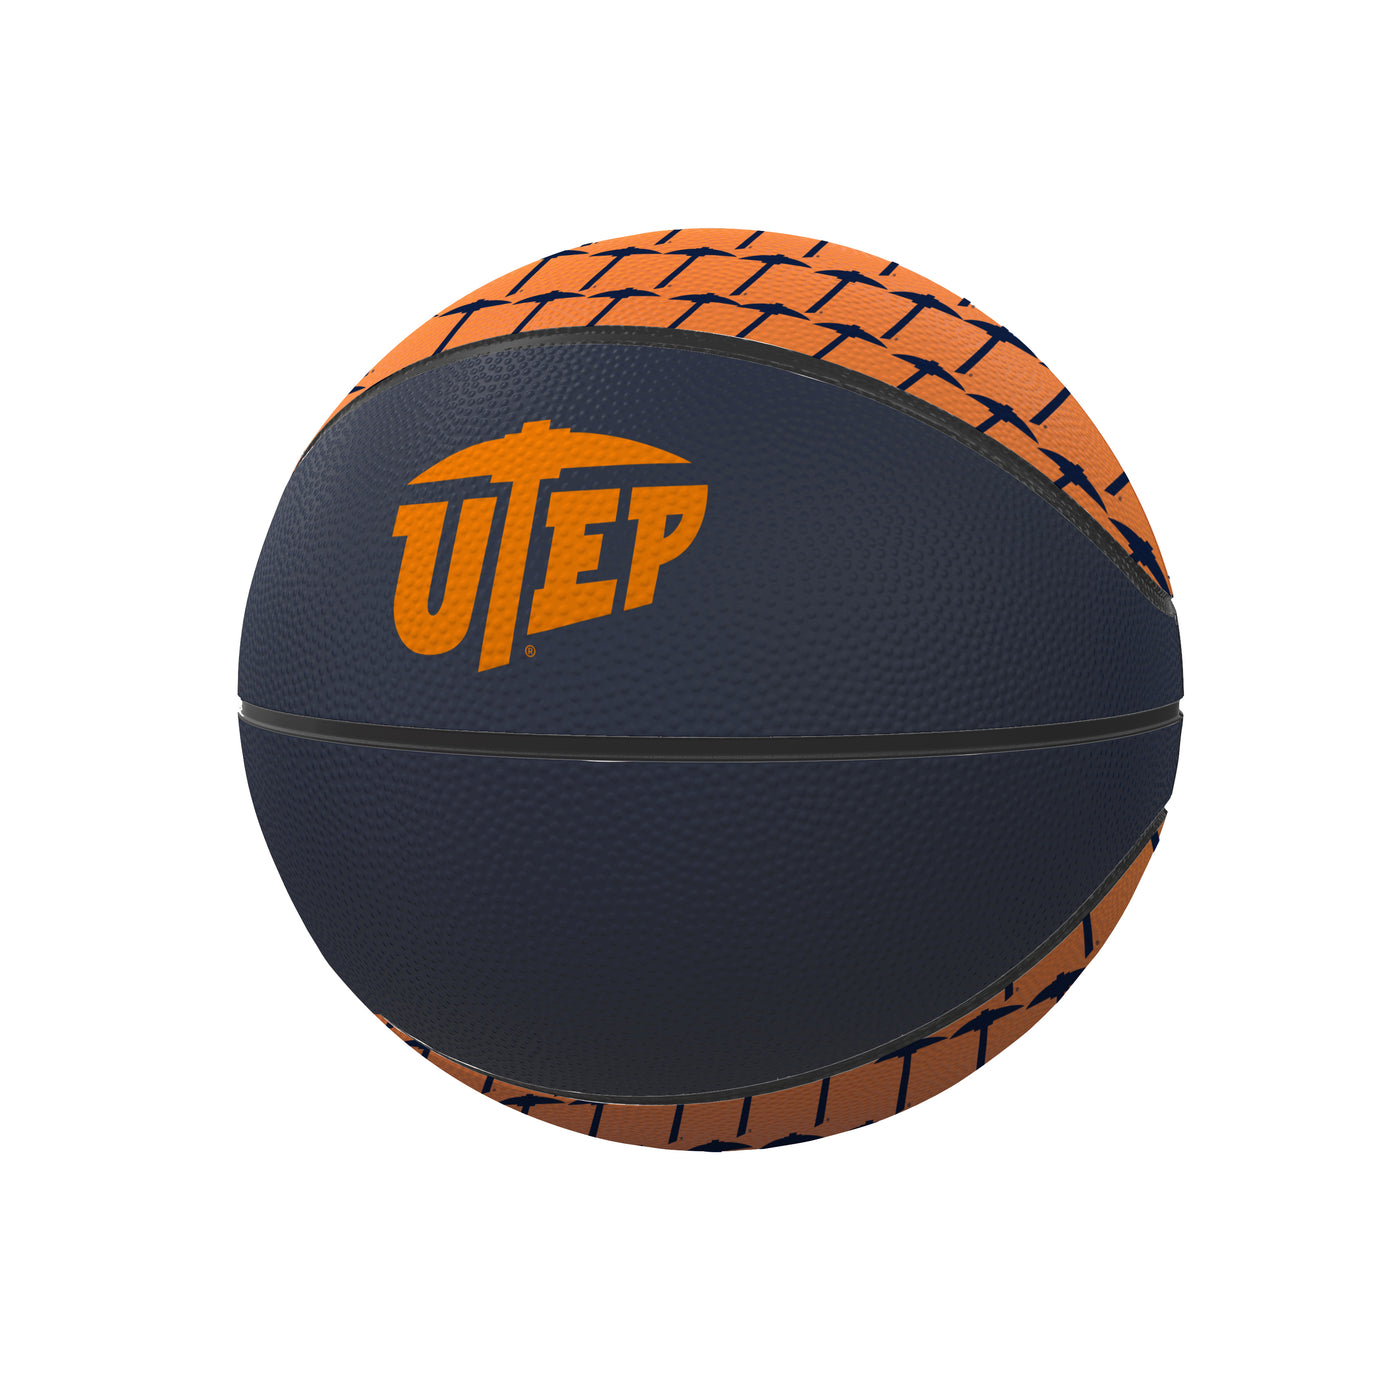 UTEP Mini Size Rubber Basketball